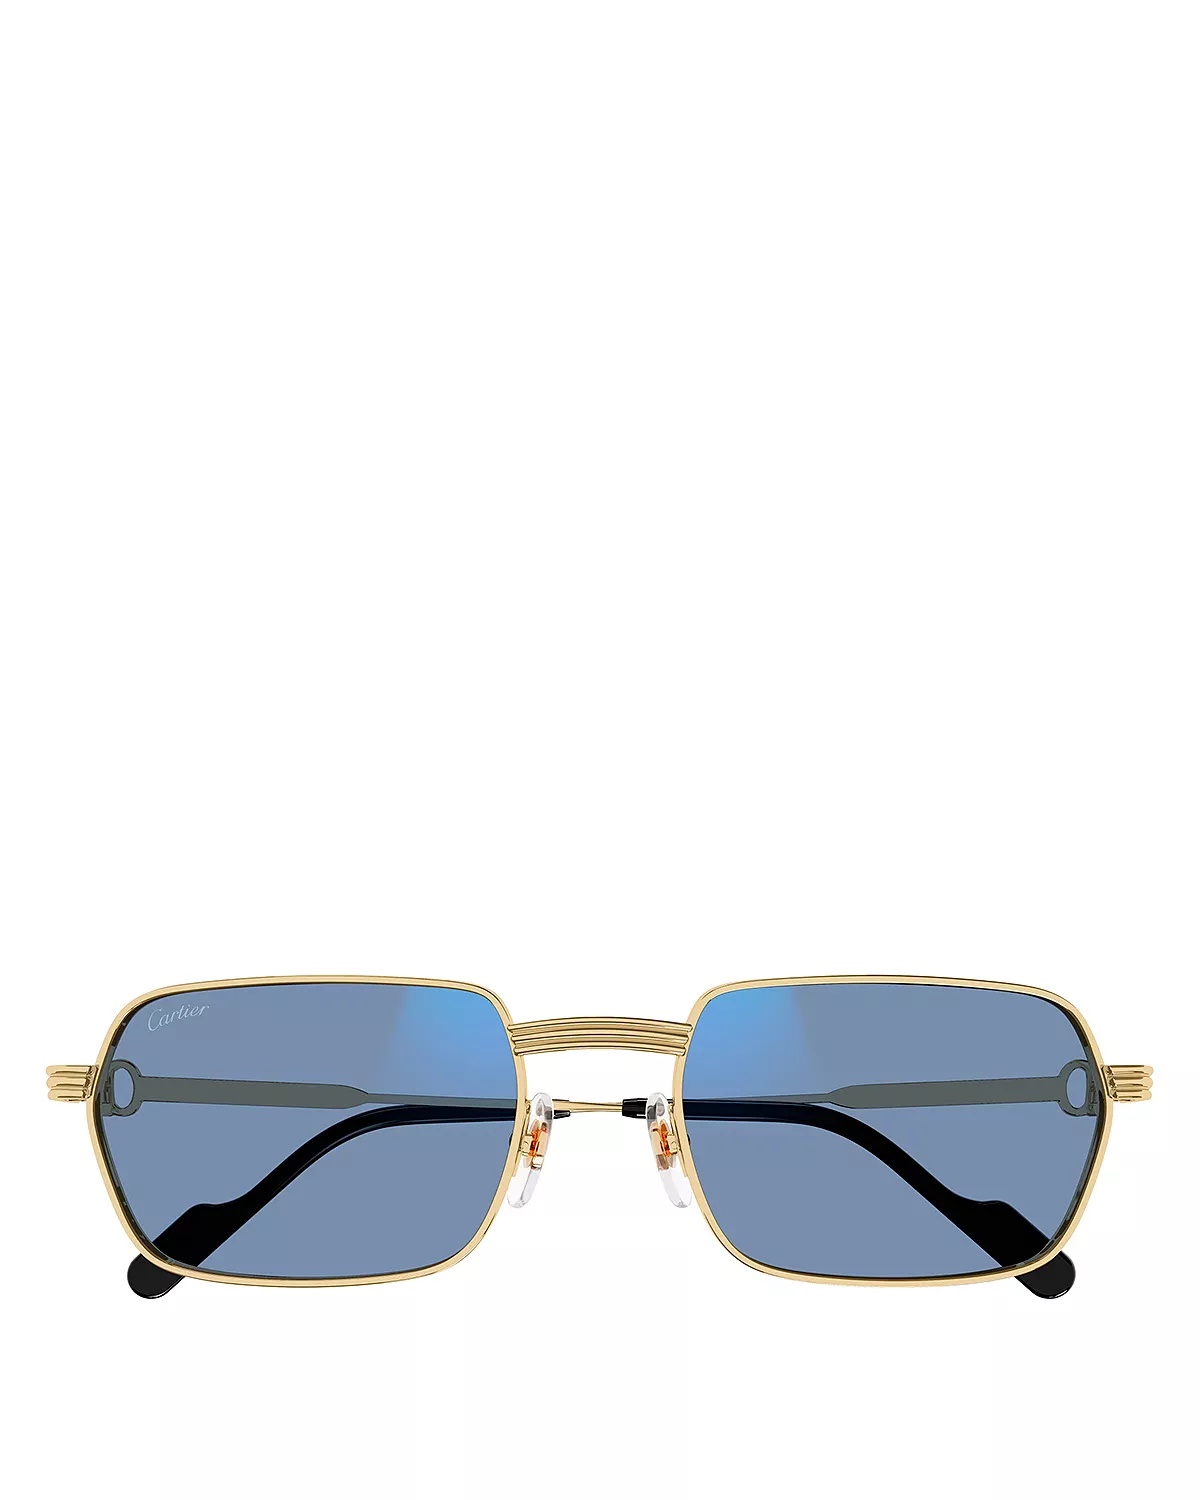 Premiere De Cartier 24 Carat Gold Plated Photochromatic Rectangular Sunglasses, 56mm - 5